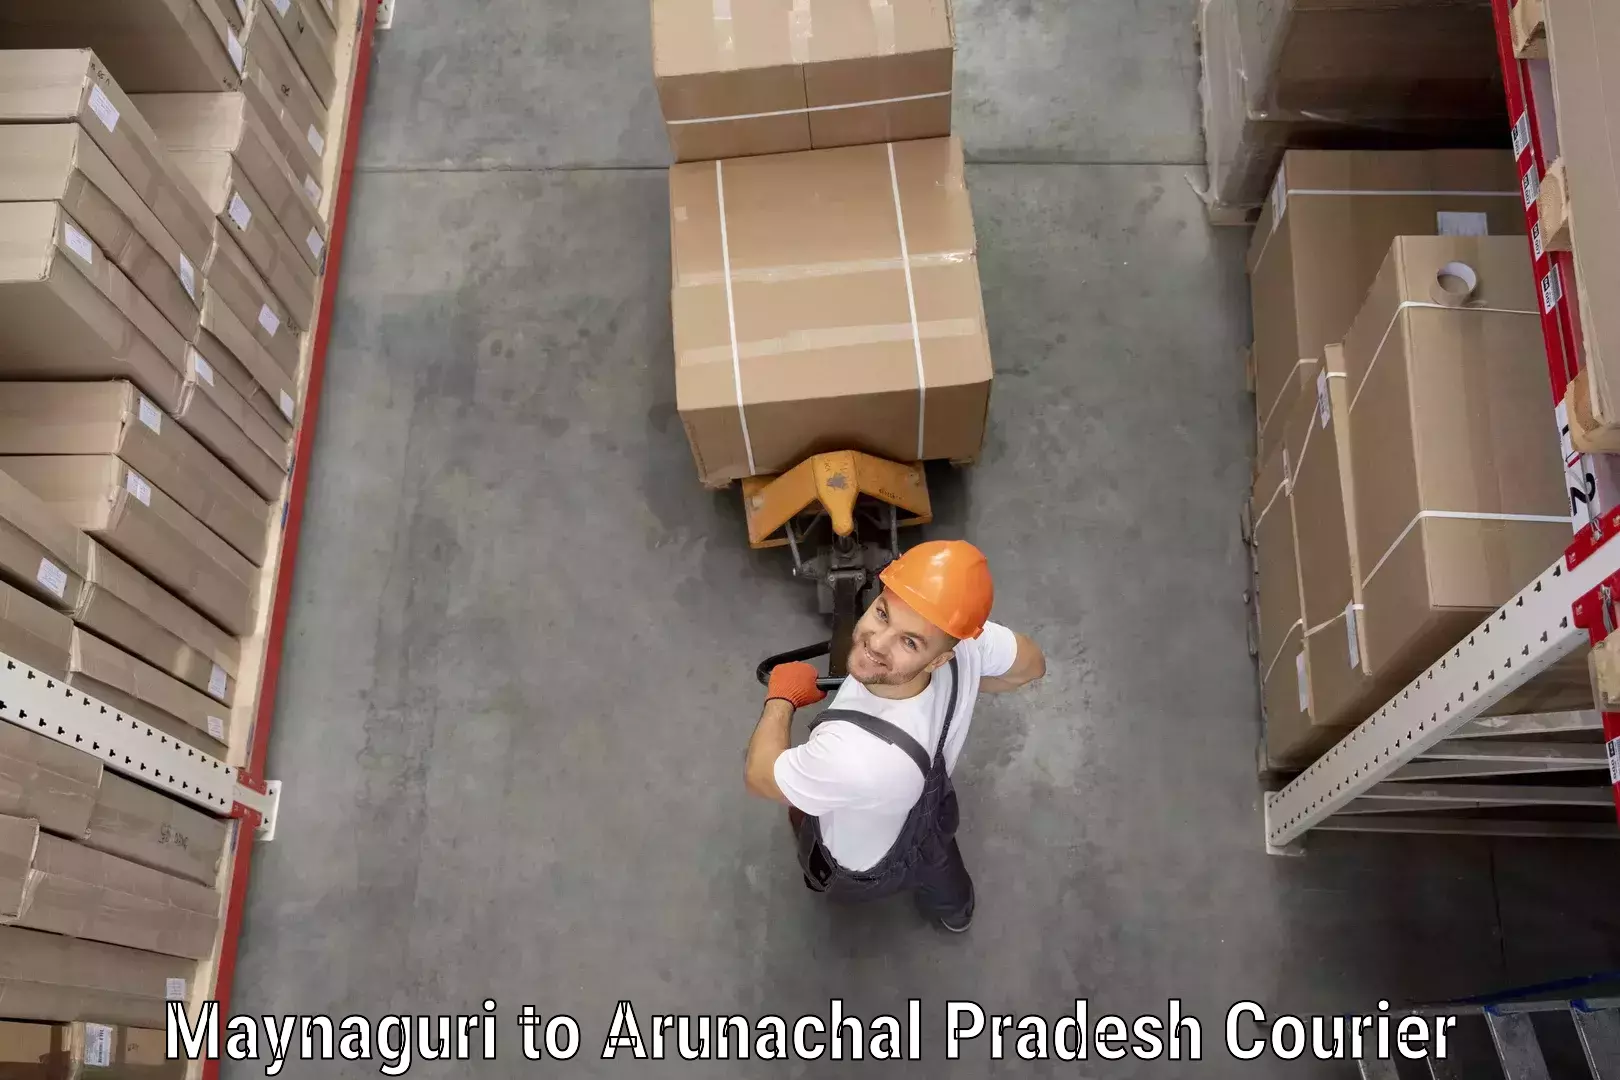 Courier service partnerships Maynaguri to Arunachal Pradesh